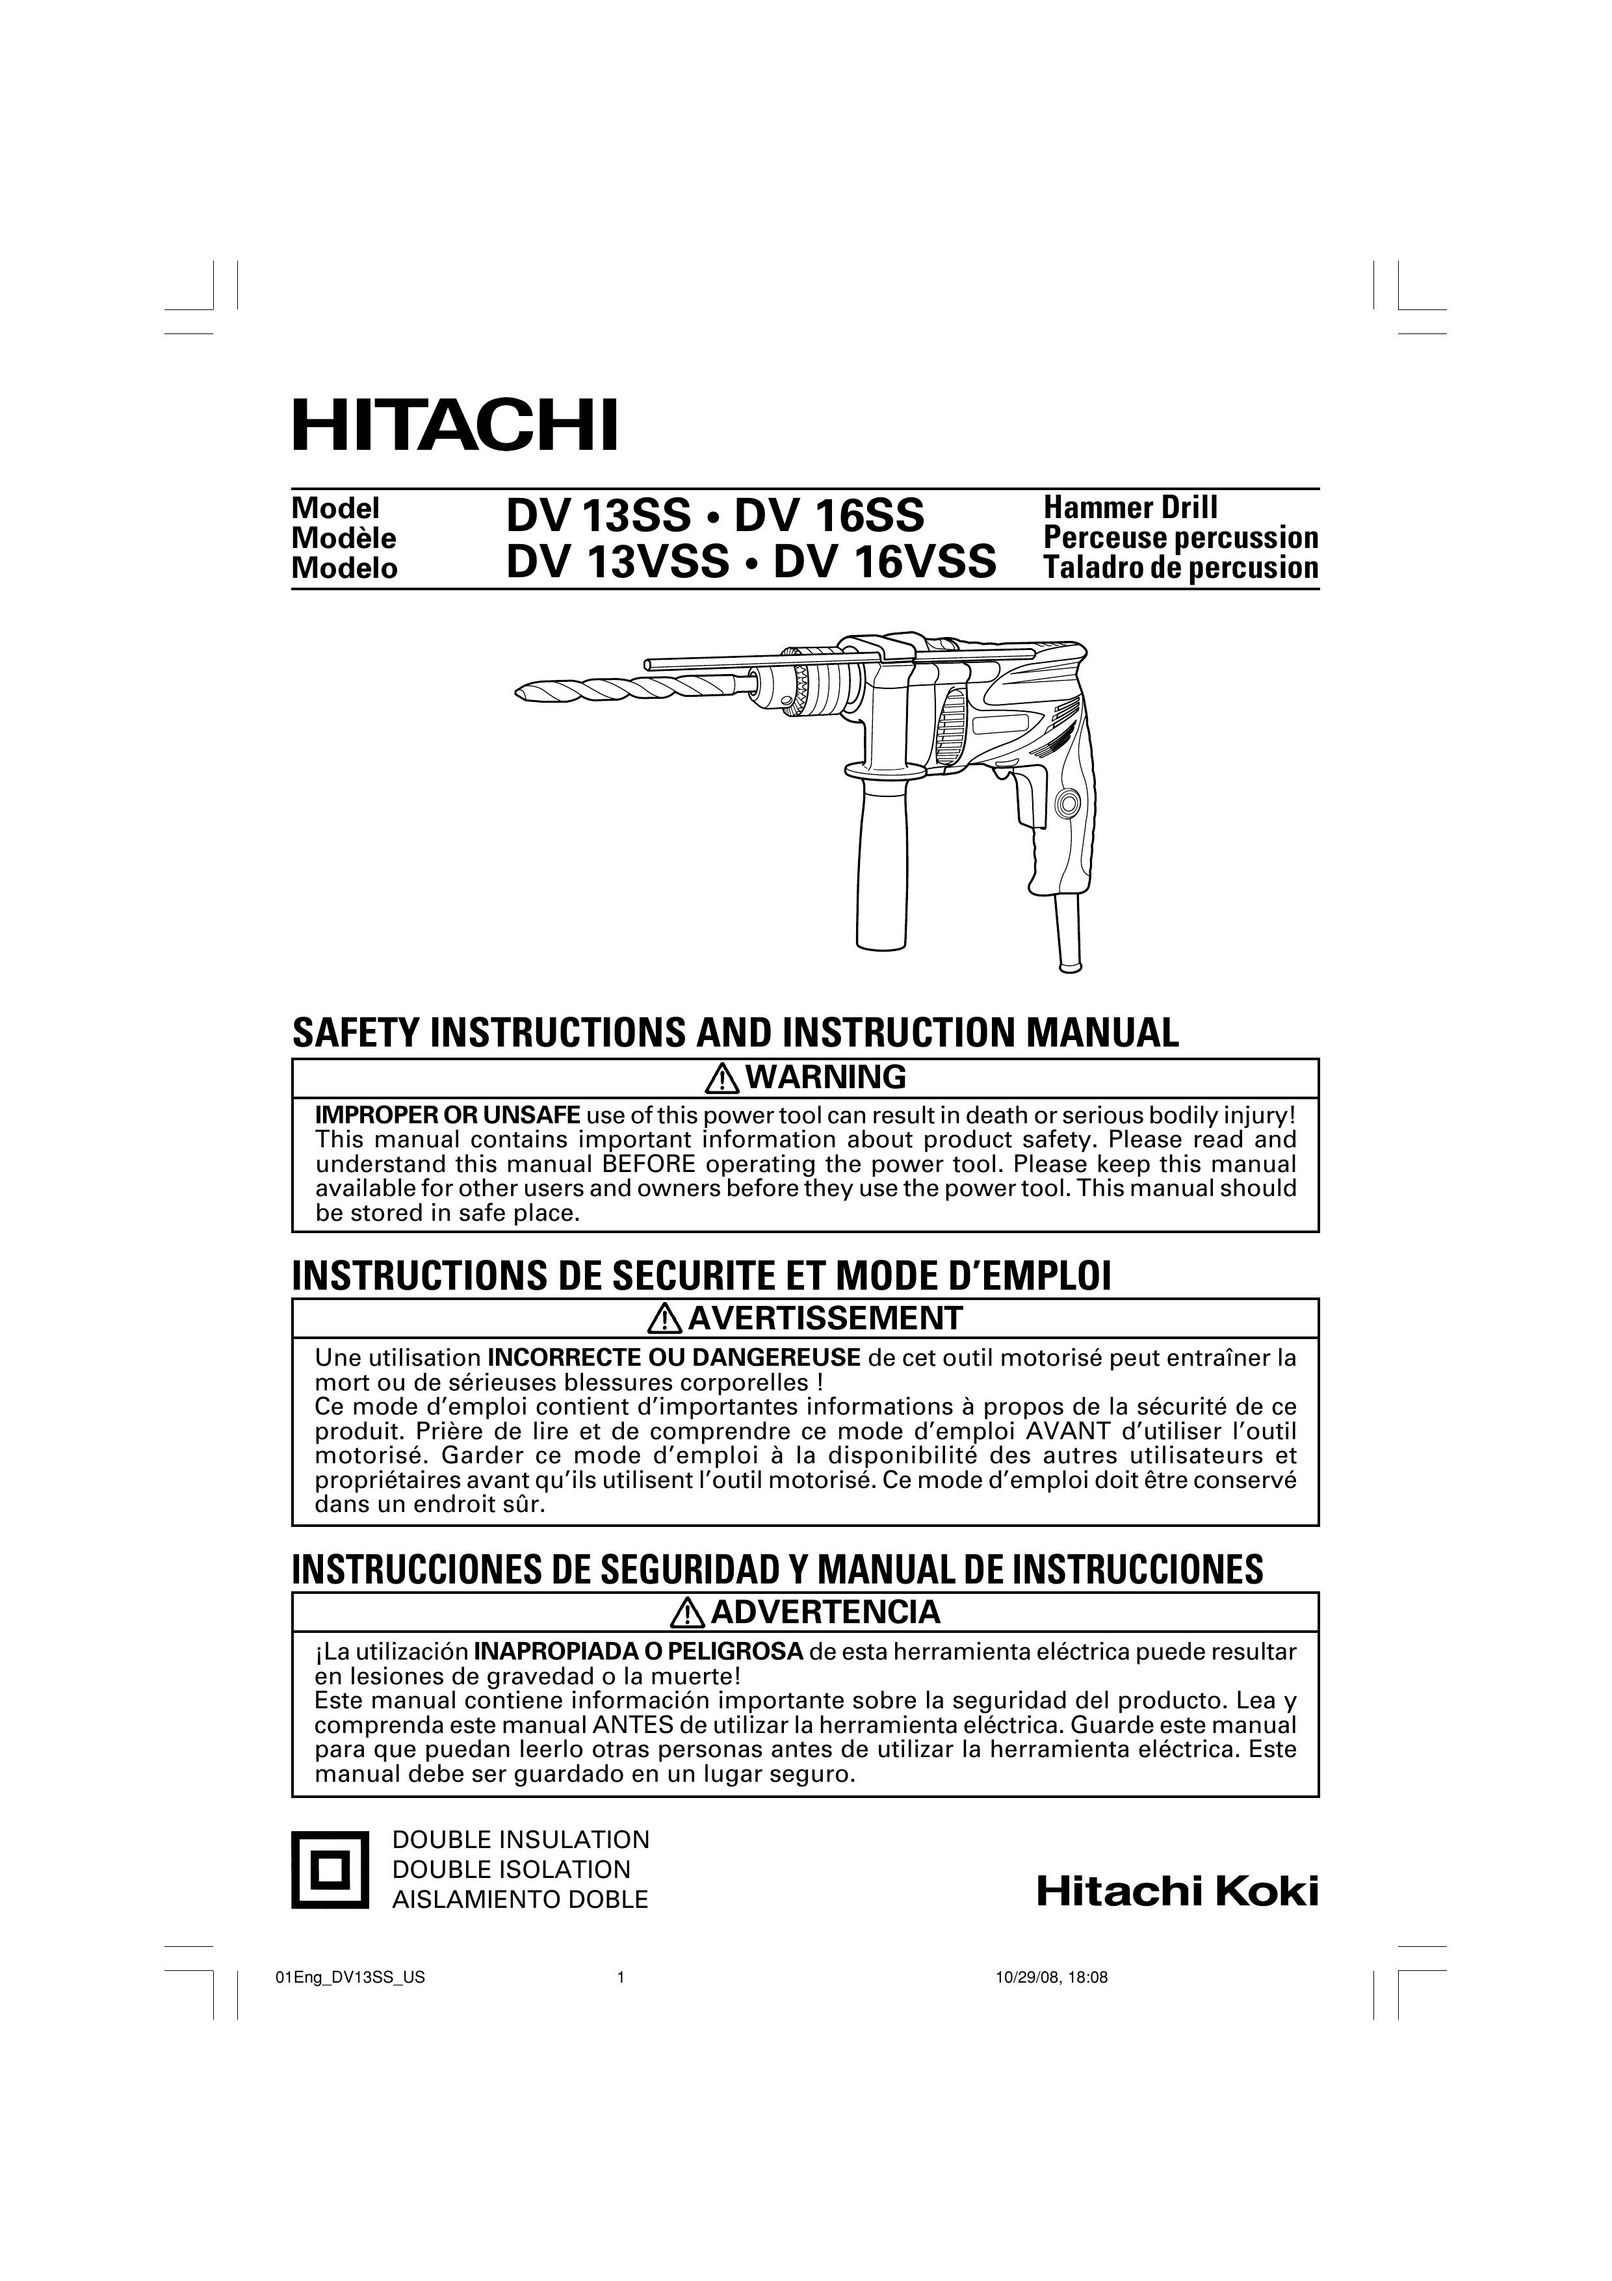 Hitachi DV 13SS Cordless Drill User Manual